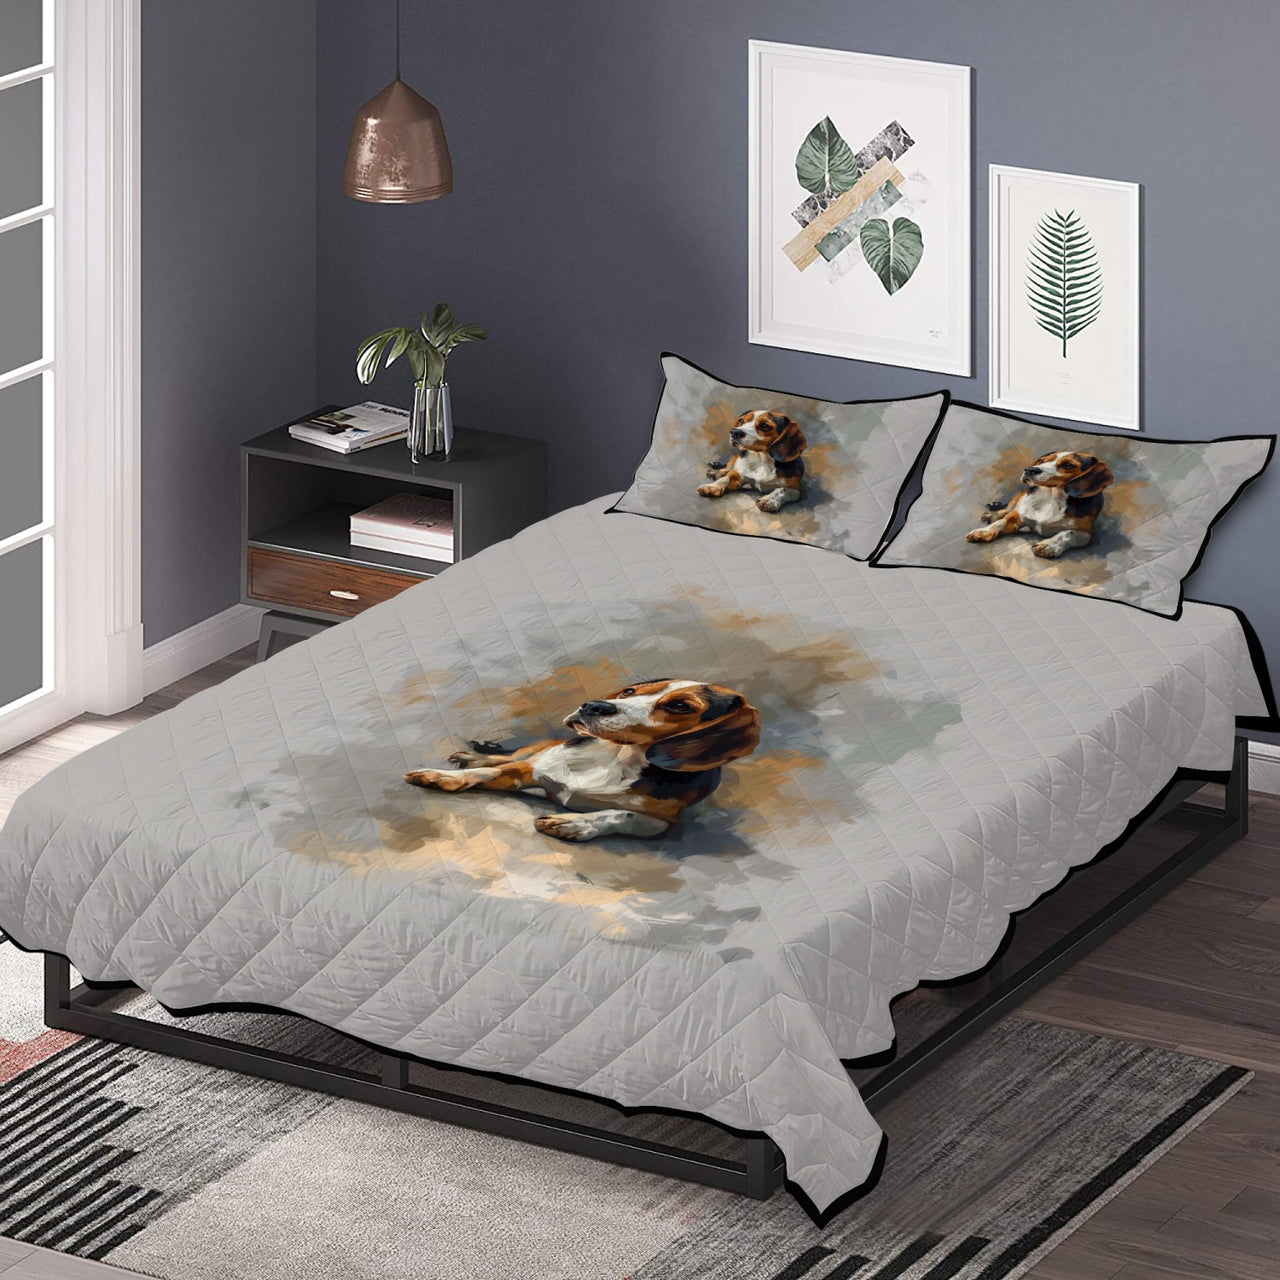 Cute Beagle Bed Set